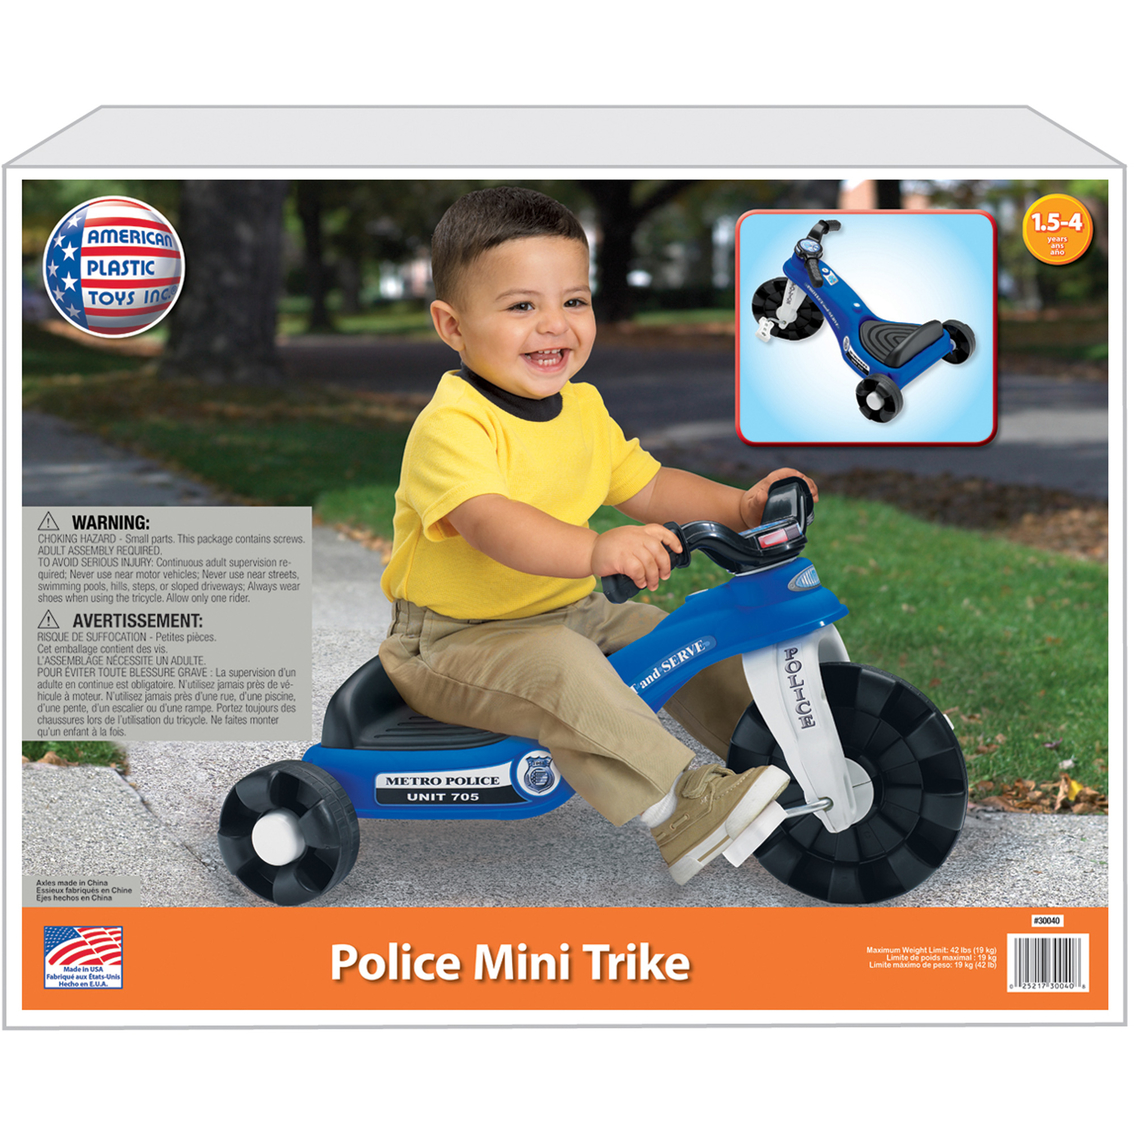 American Plastic Toys Police Mini Trike - Image 2 of 2